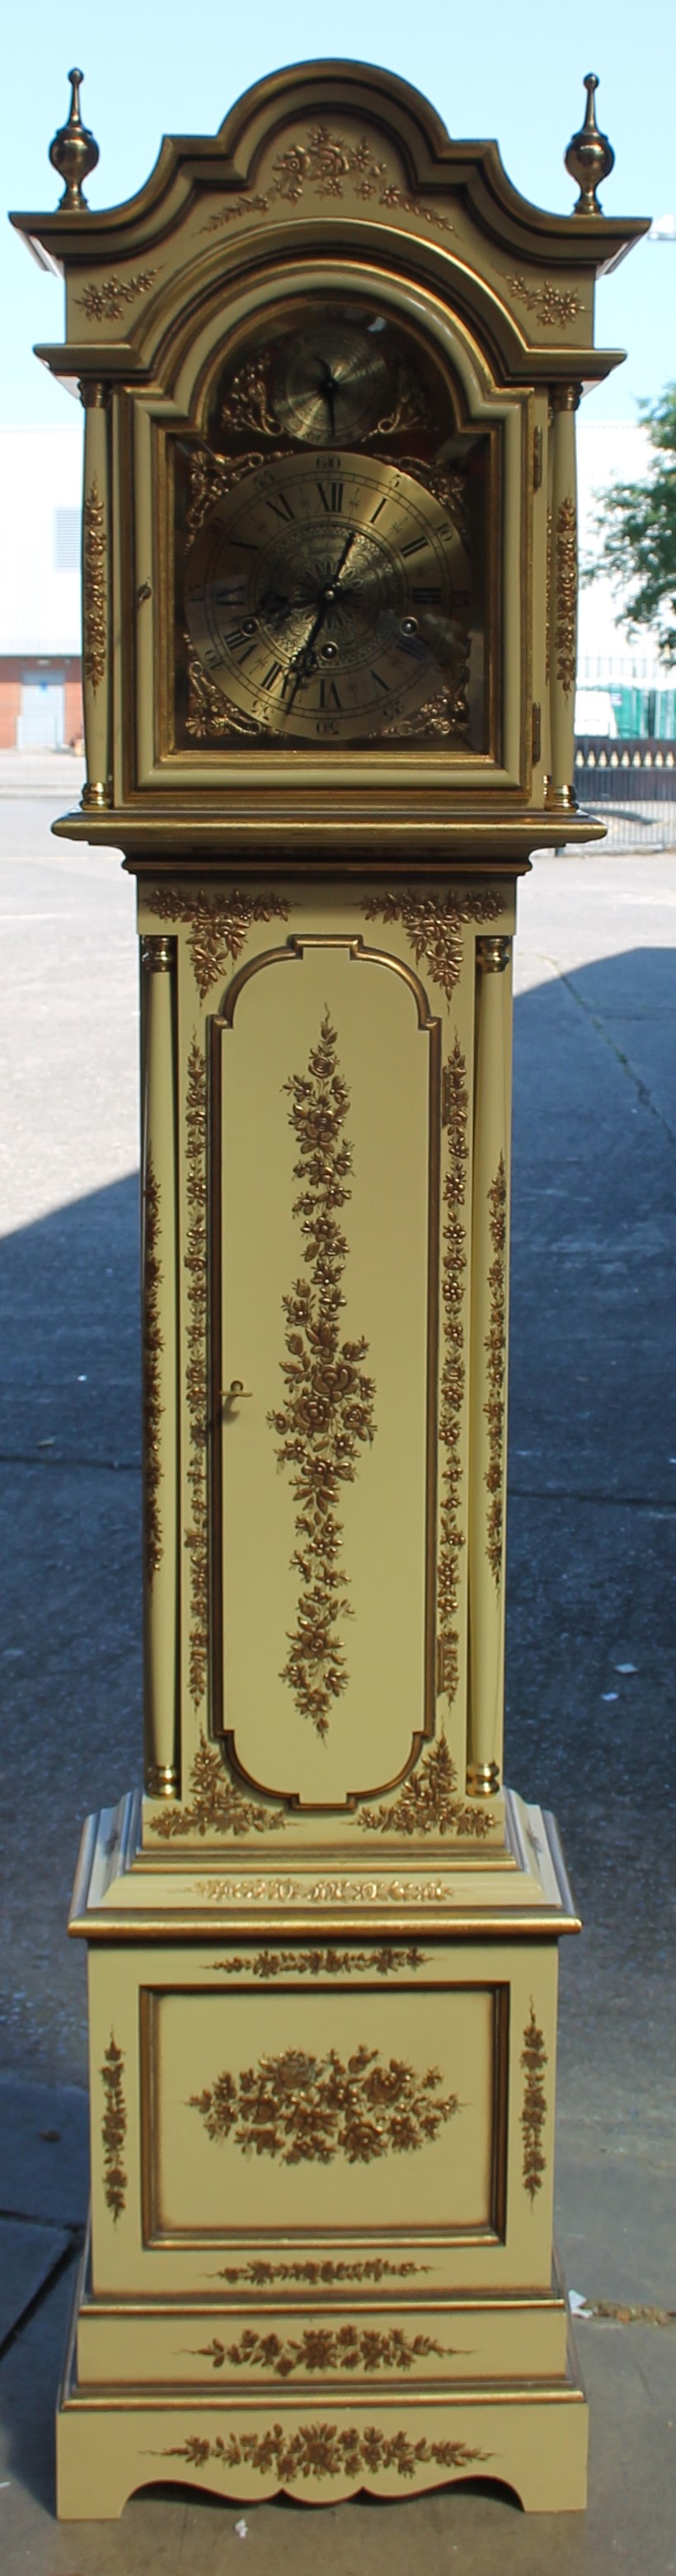 A Portuguese Reguladora cream and gilt decorated long case clock, - Image 2 of 2